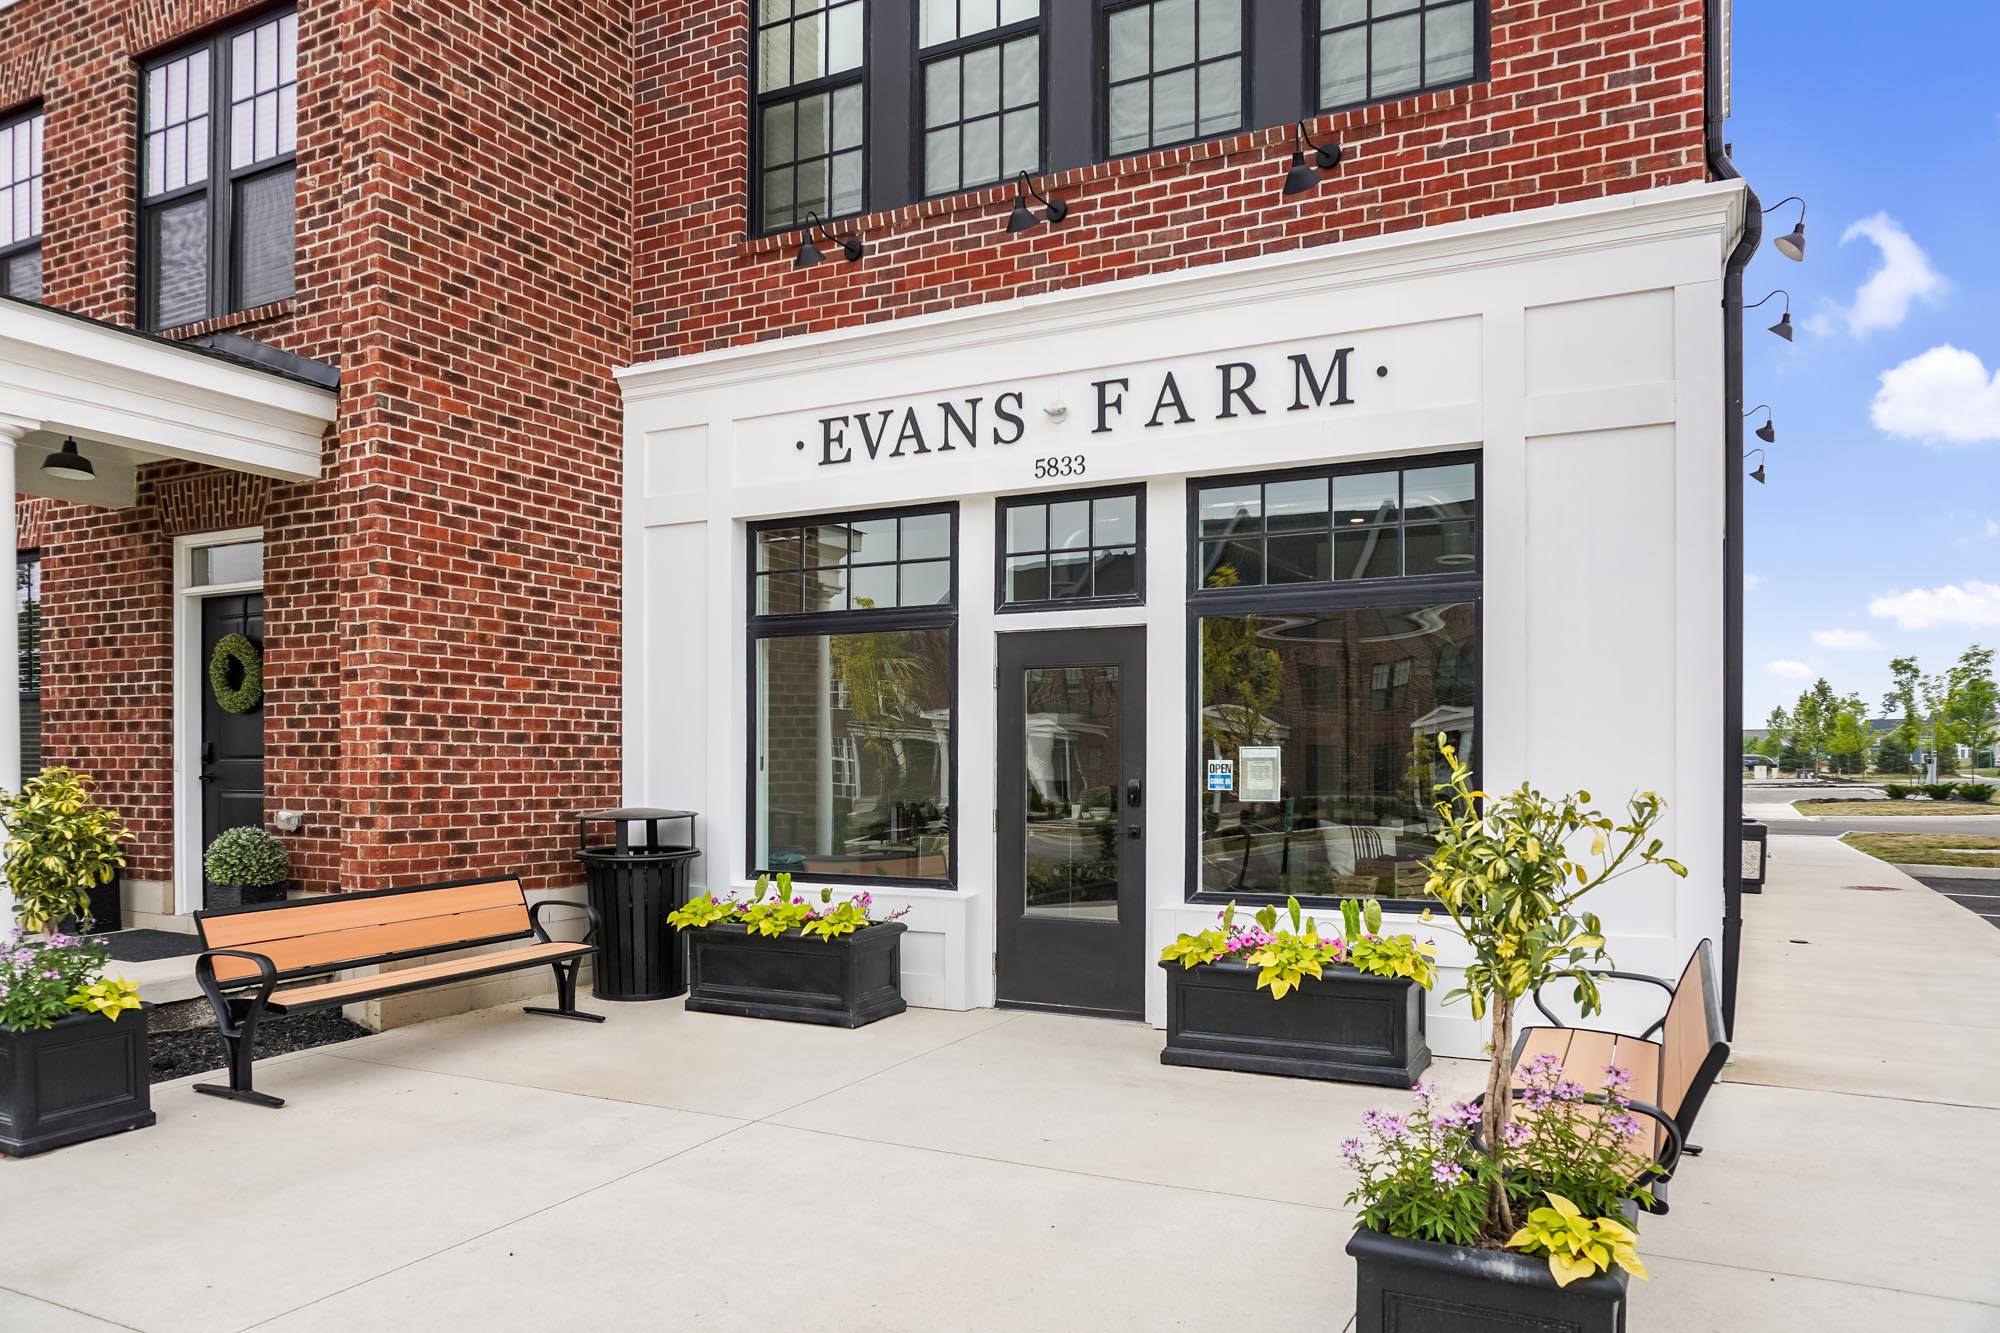 Evans Farm | Evans Farm